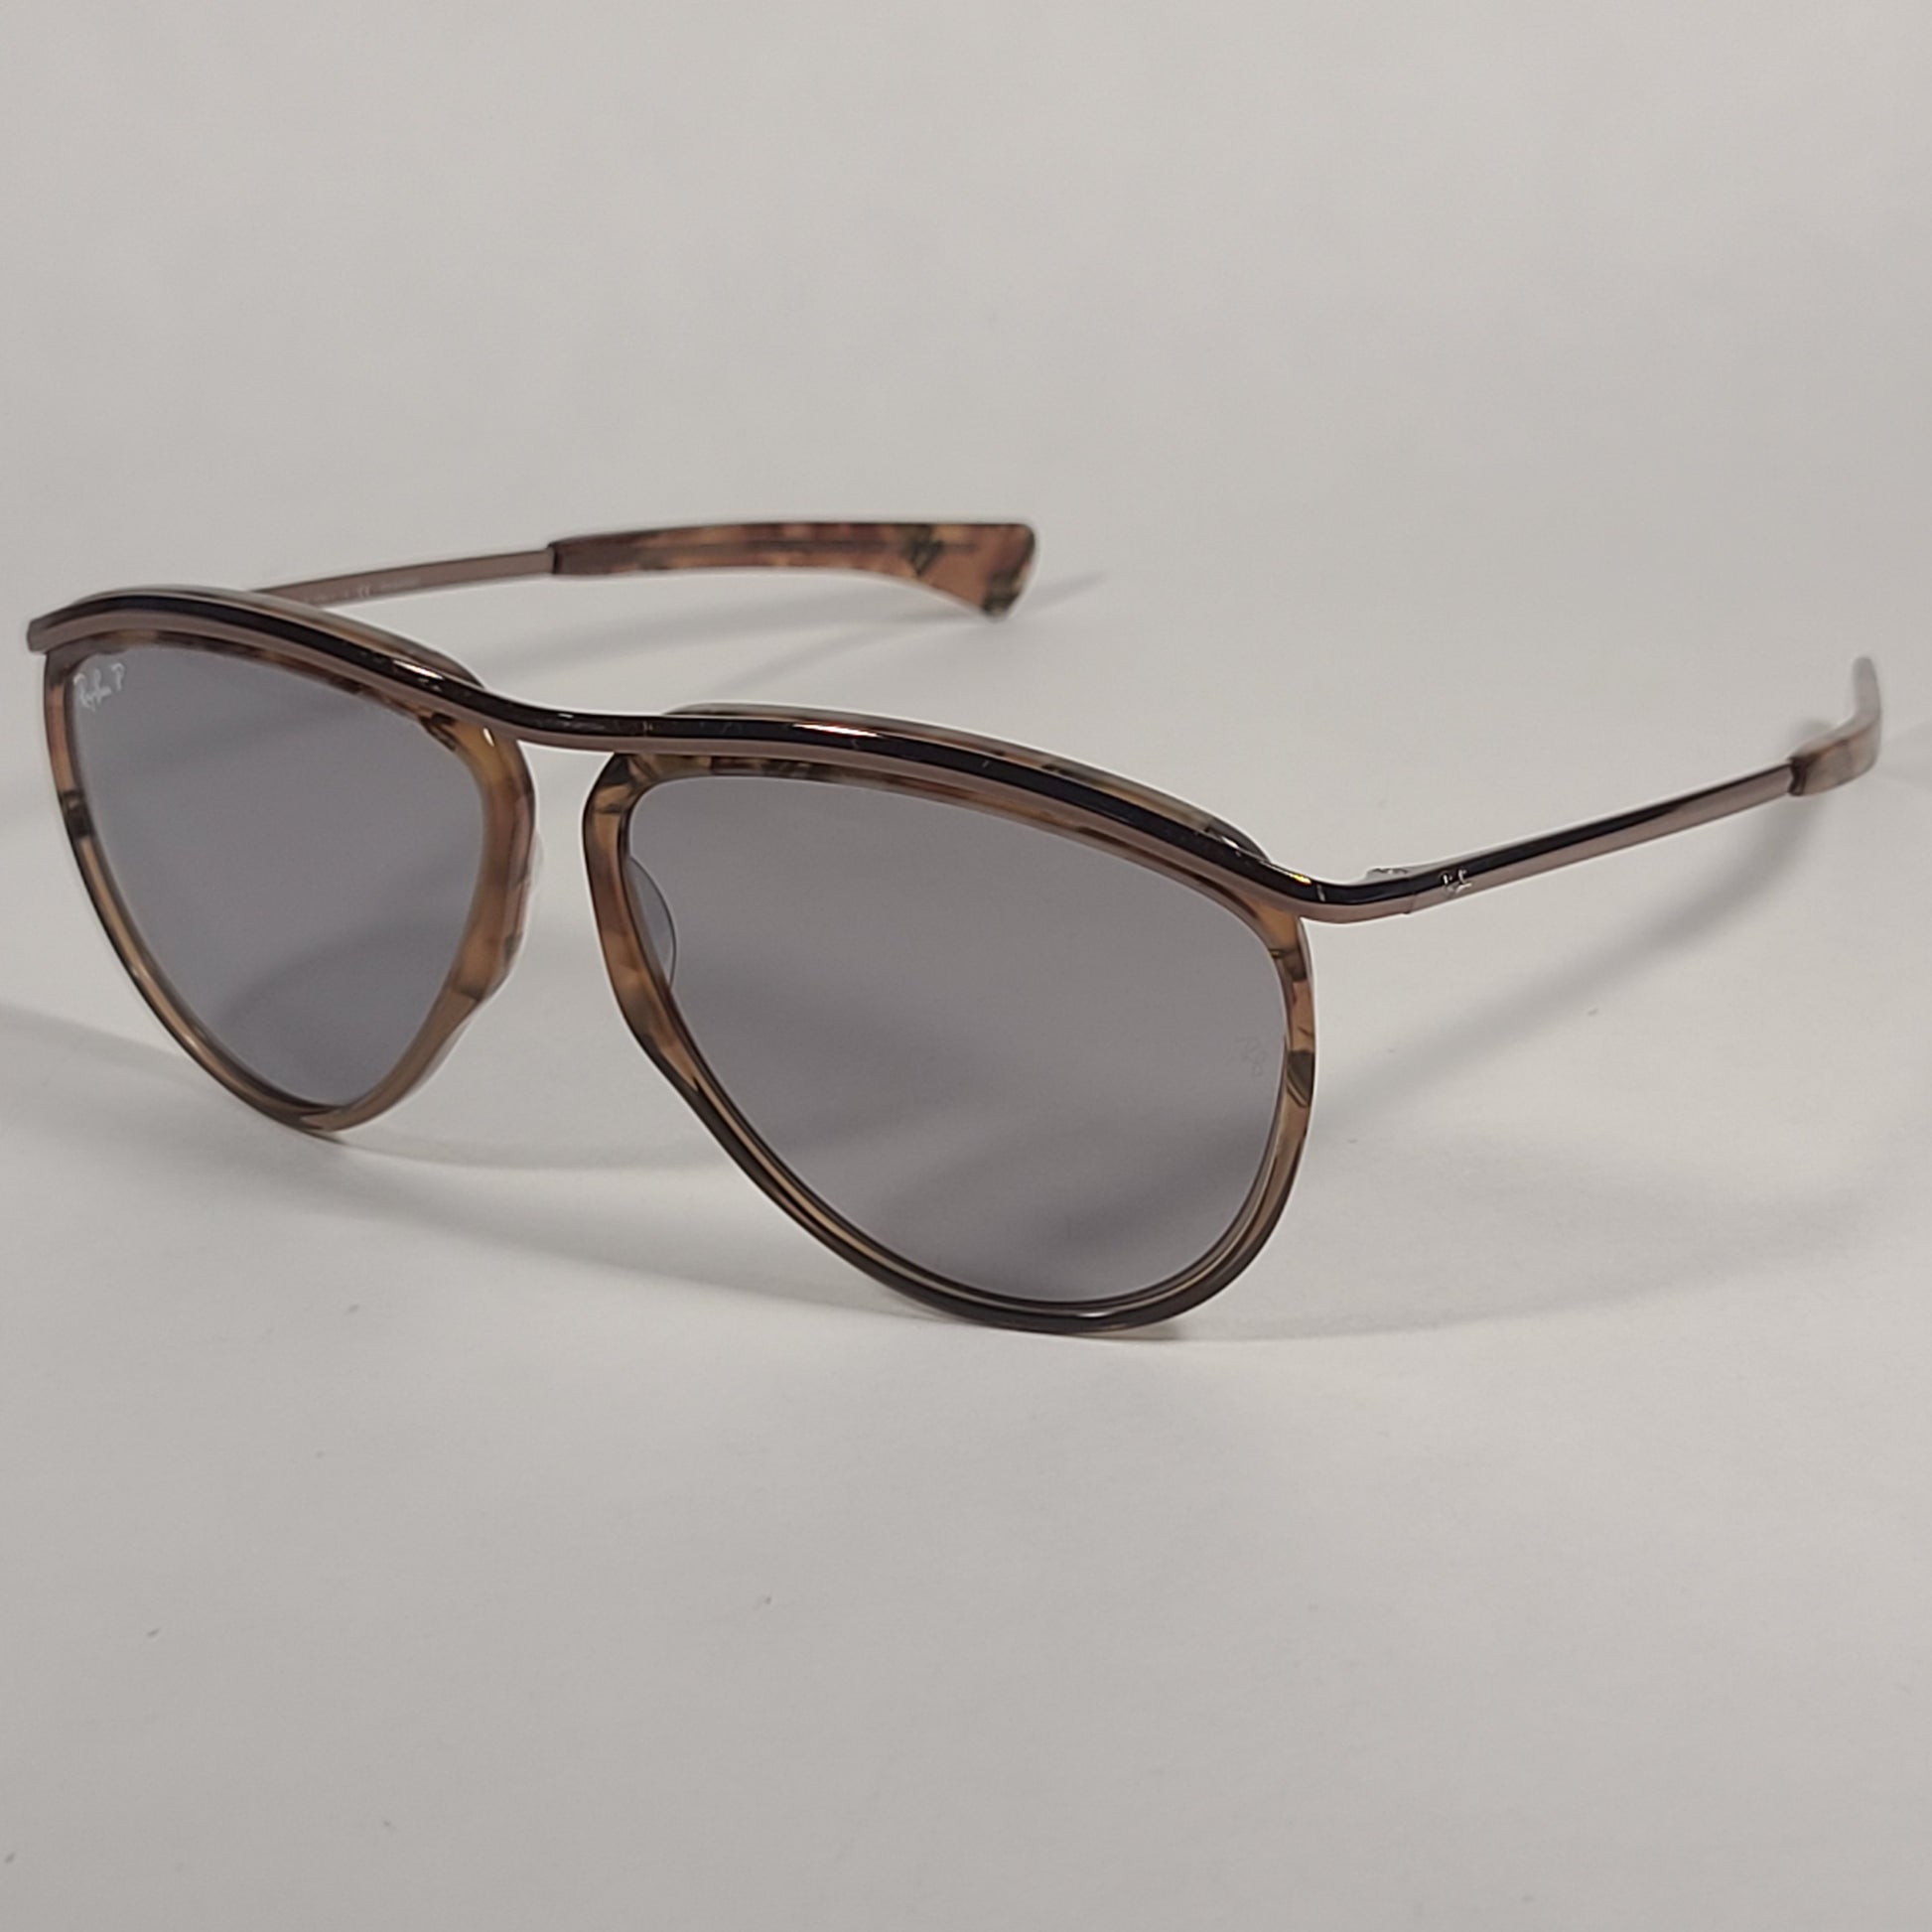 Ray-Ban Olympian Aviator Polarized Sunglasses Brown Havana Frame Polar Gray Lens RB2219 1287/48 - Sunglasses